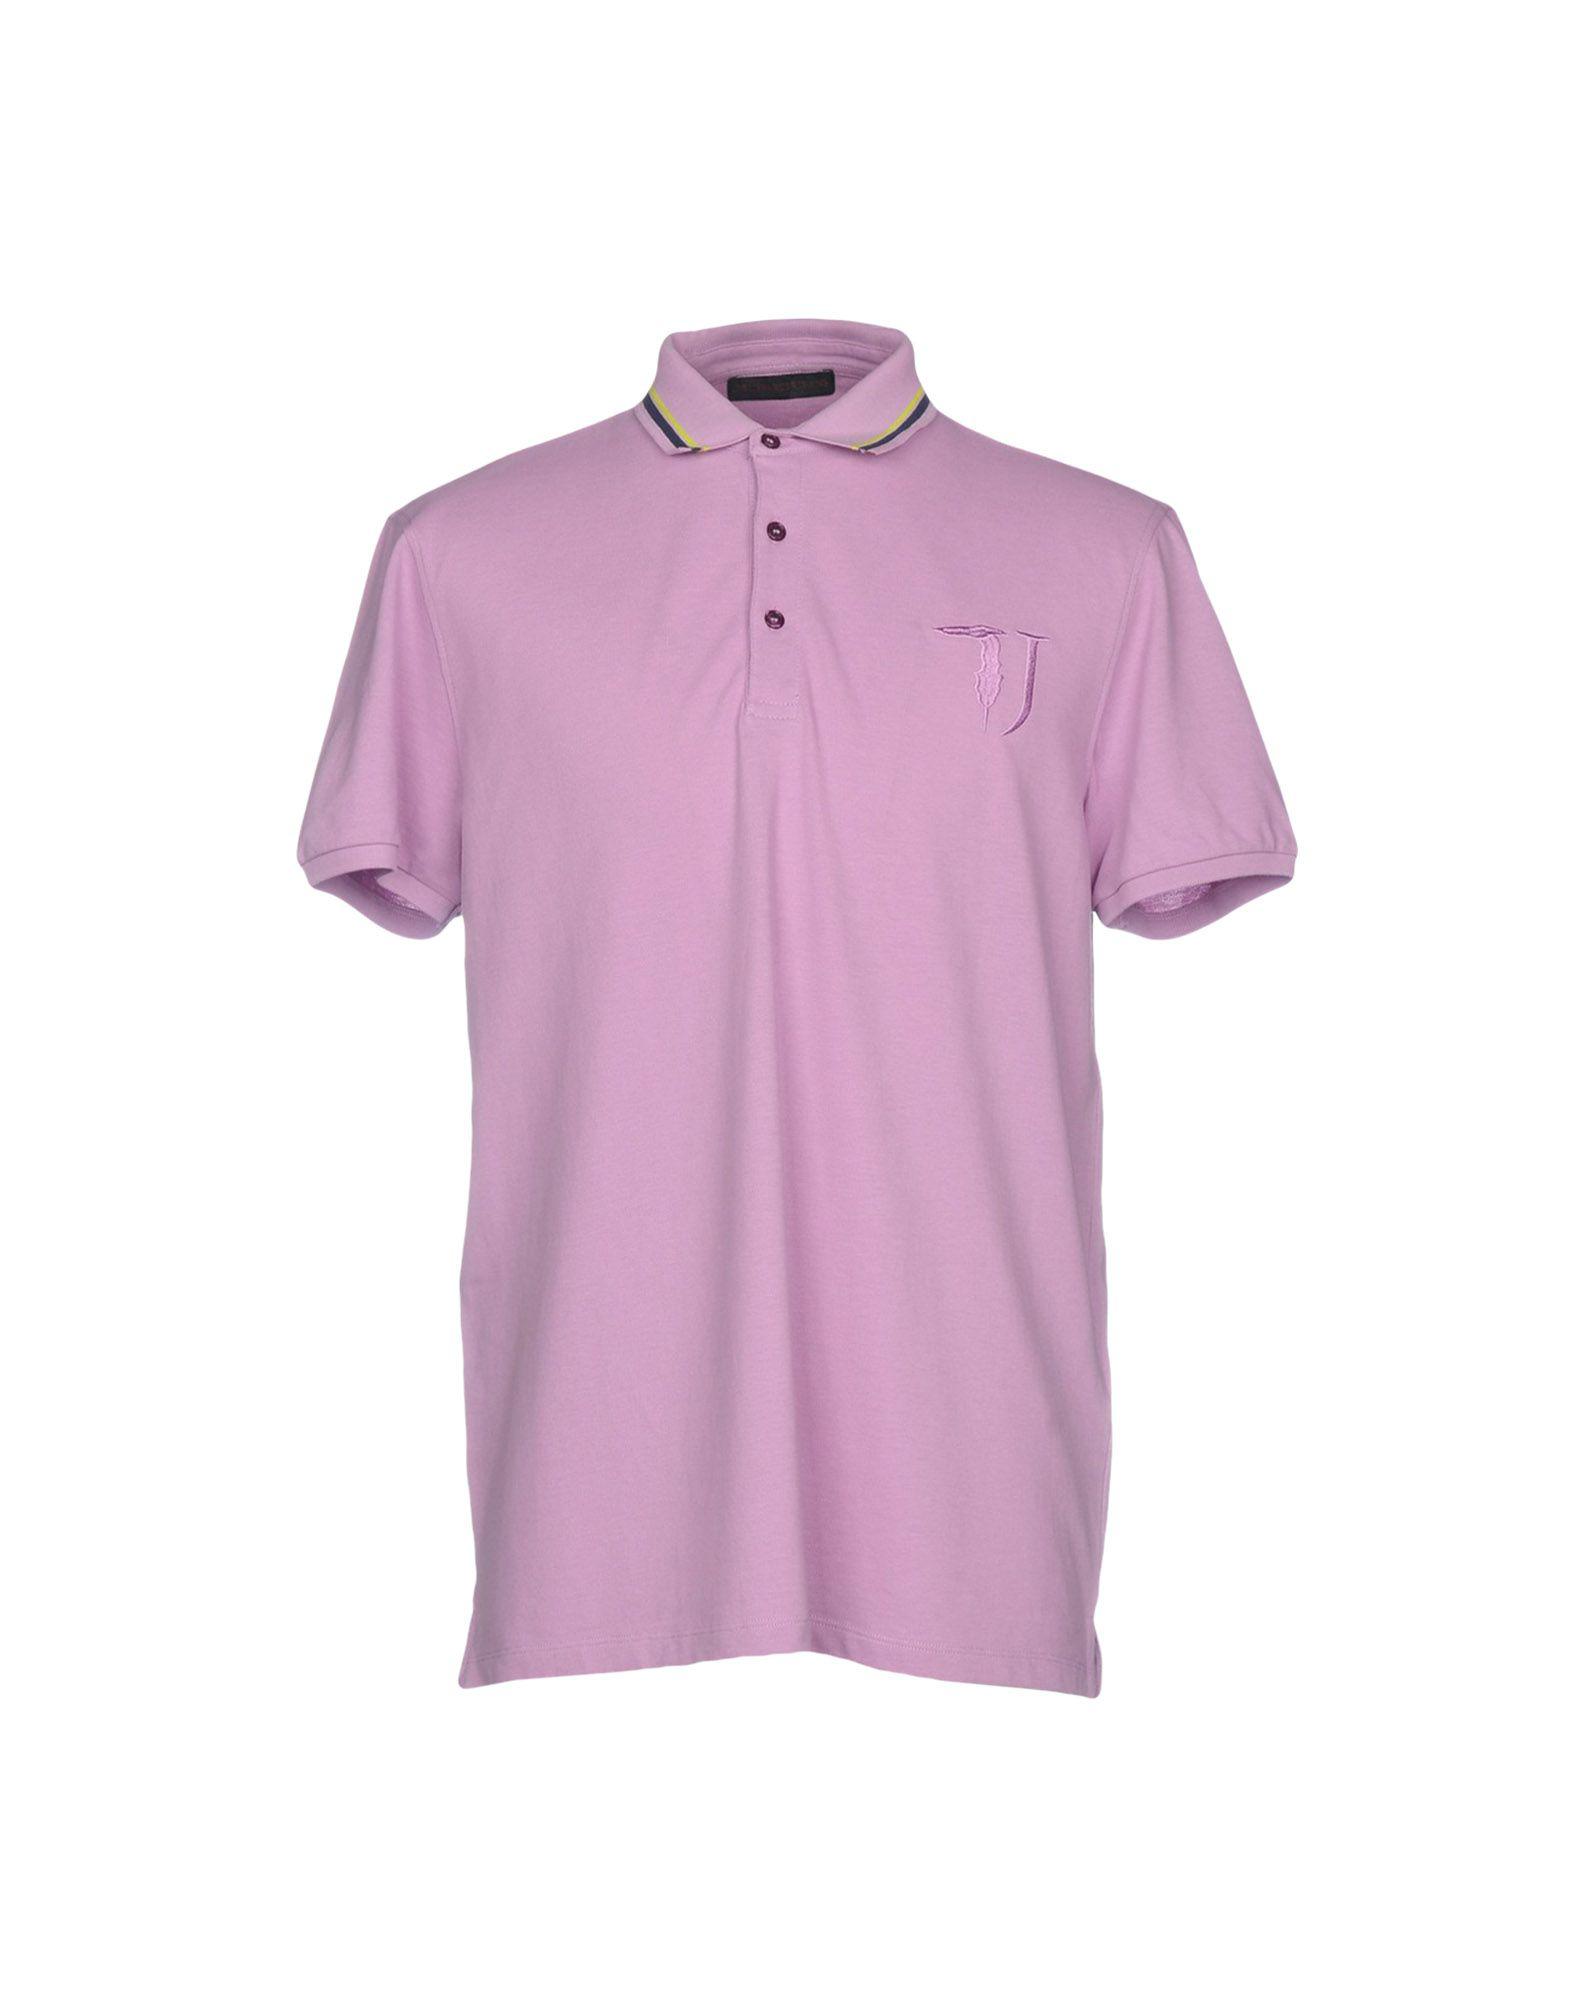 Trussardi Cotton Polo Shirt in Light Purple (Purple) for Men - Lyst